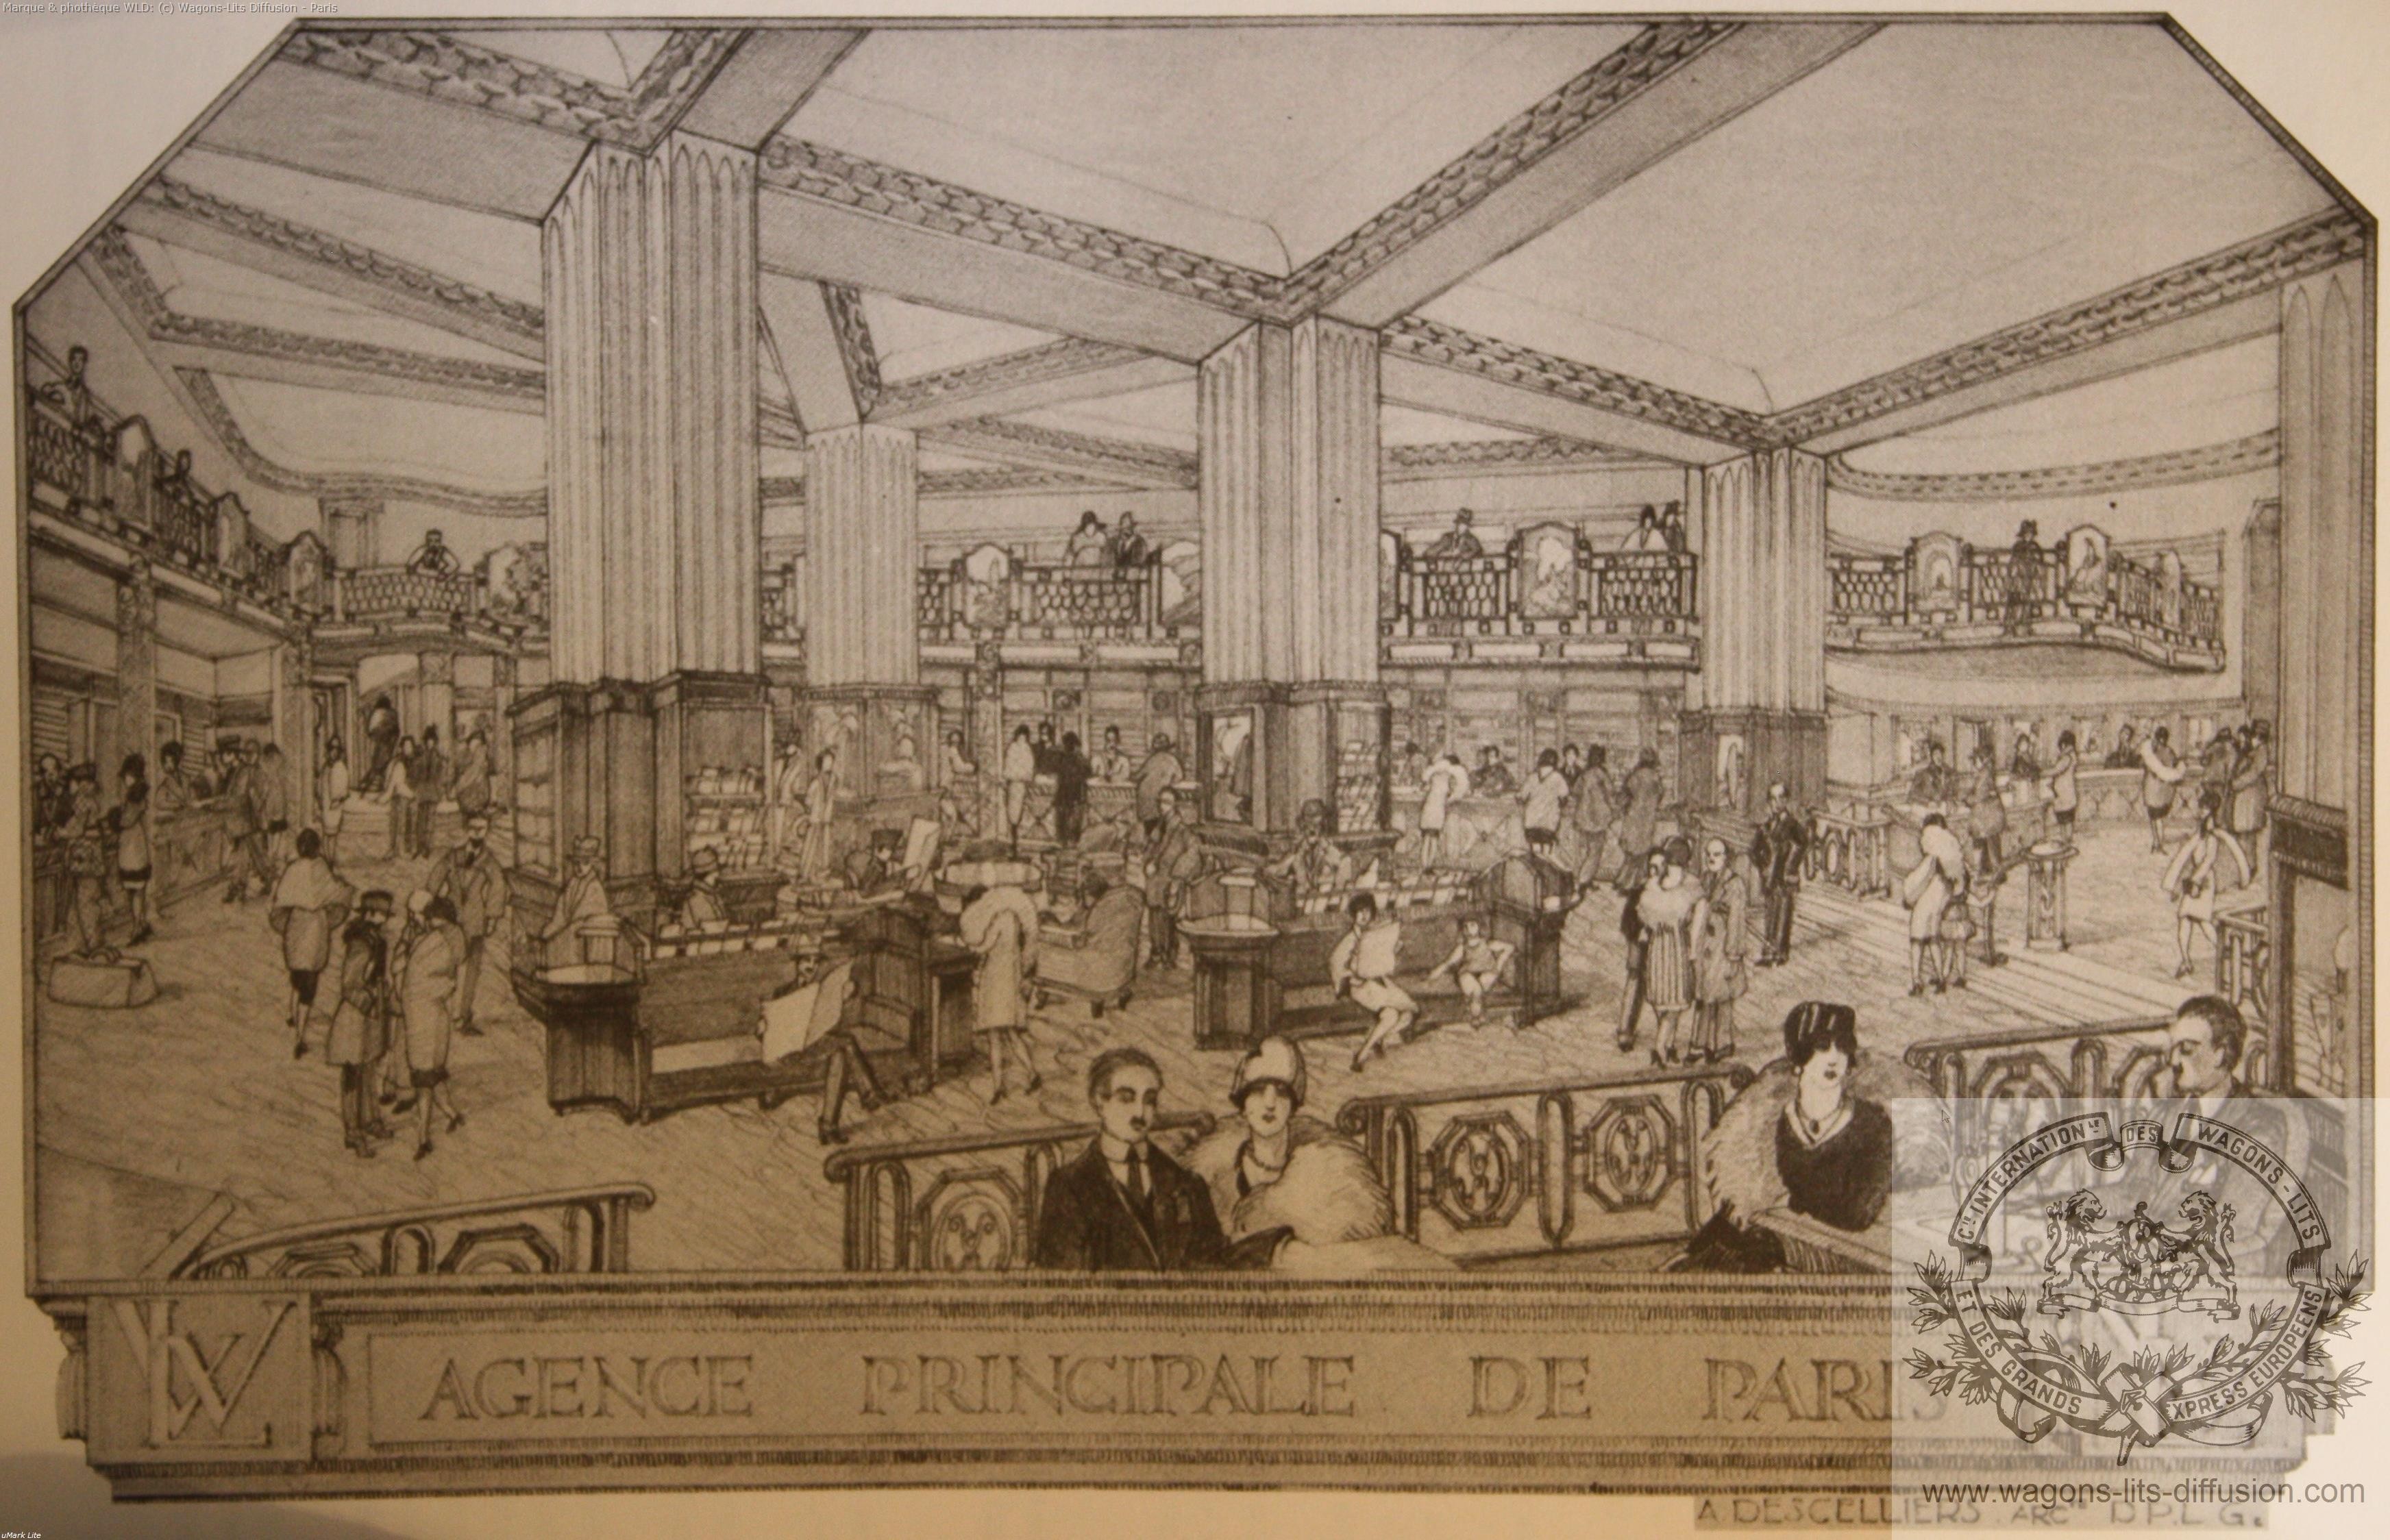 Wl agence principale de paris opera vers 1880